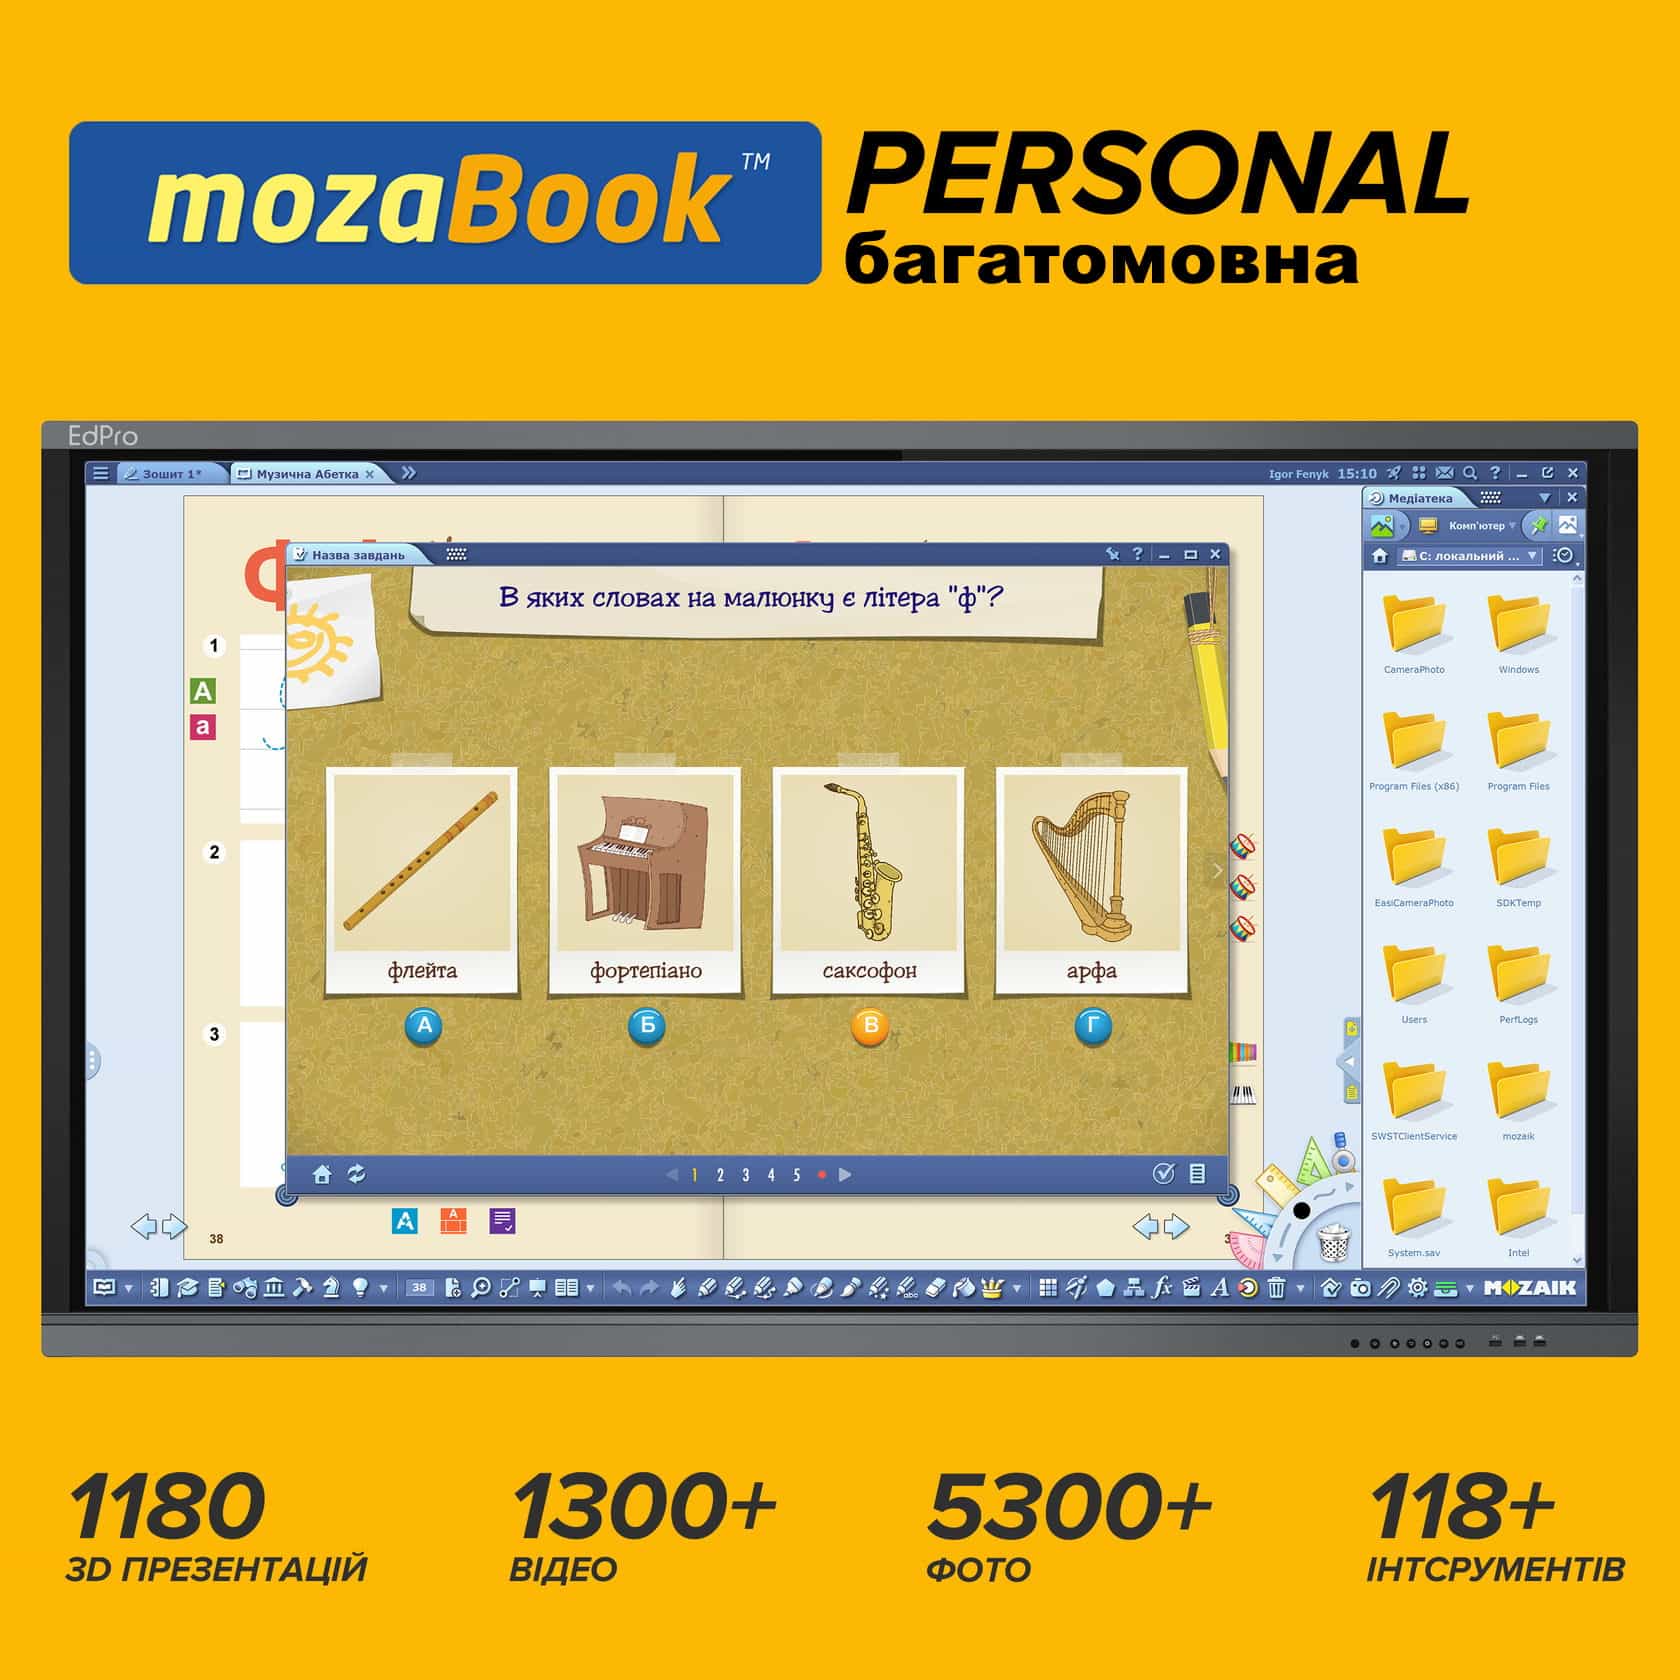 MozaBook